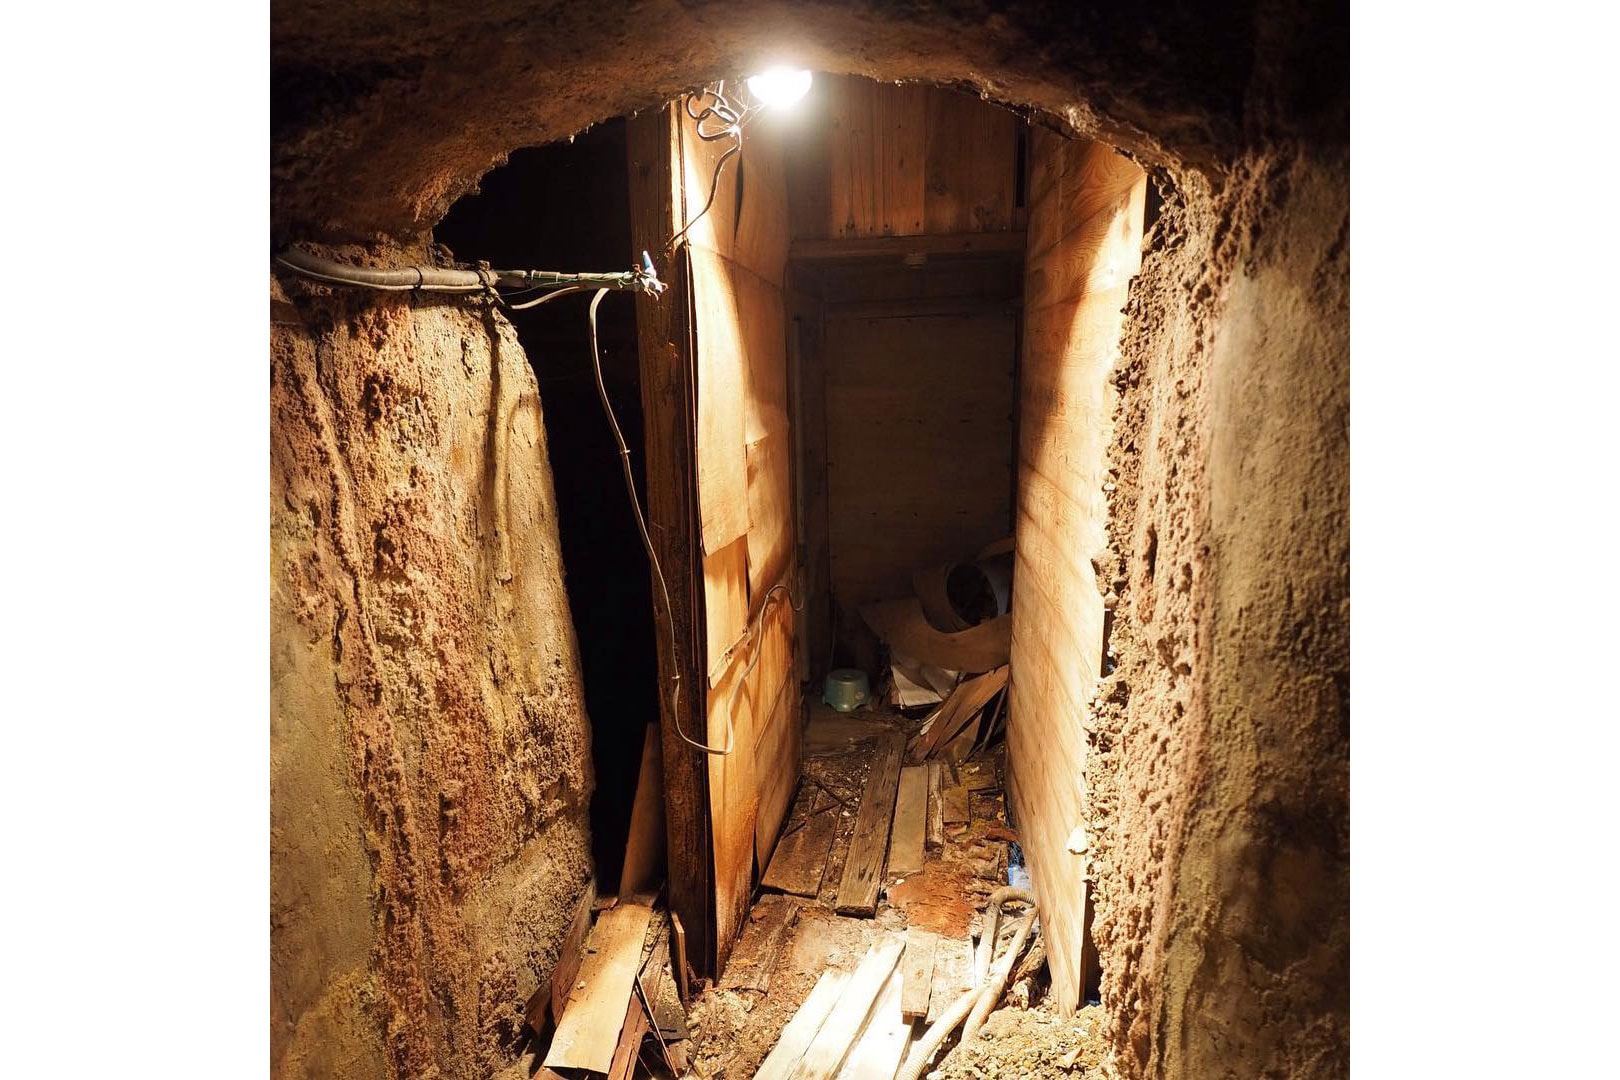 Oimatsu Onsen Dilapidated Building Japan Travel Bathhouse Secret Hidden Explore Mysterious Abandoned Architecture